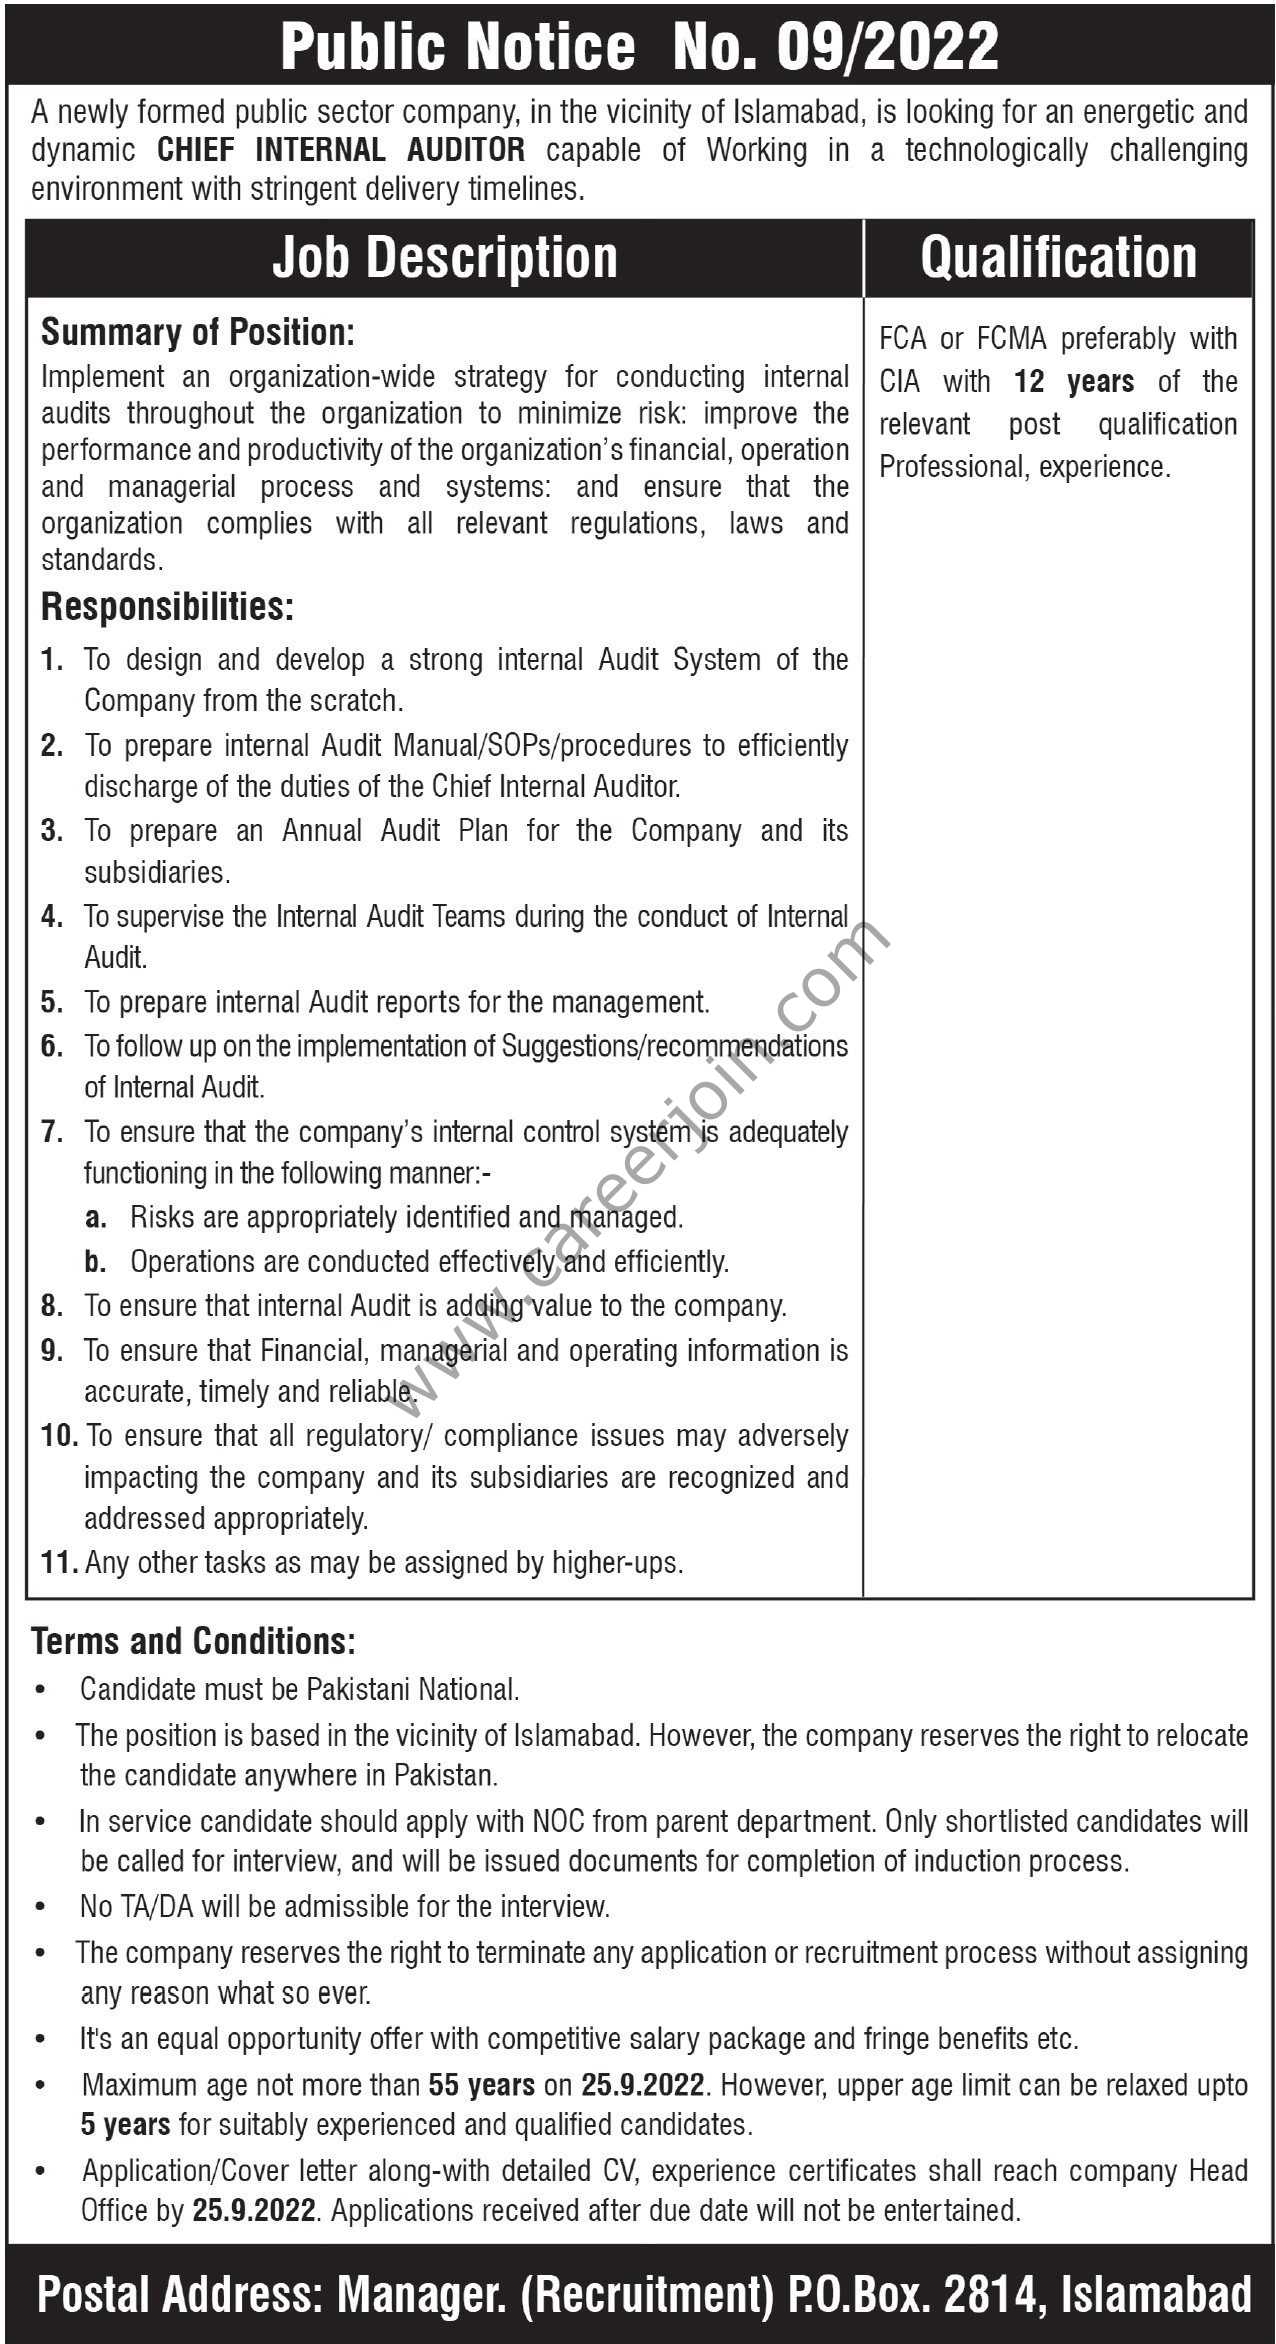 Public Sector Company Jobs 18 September 2022 Express Tribune 01